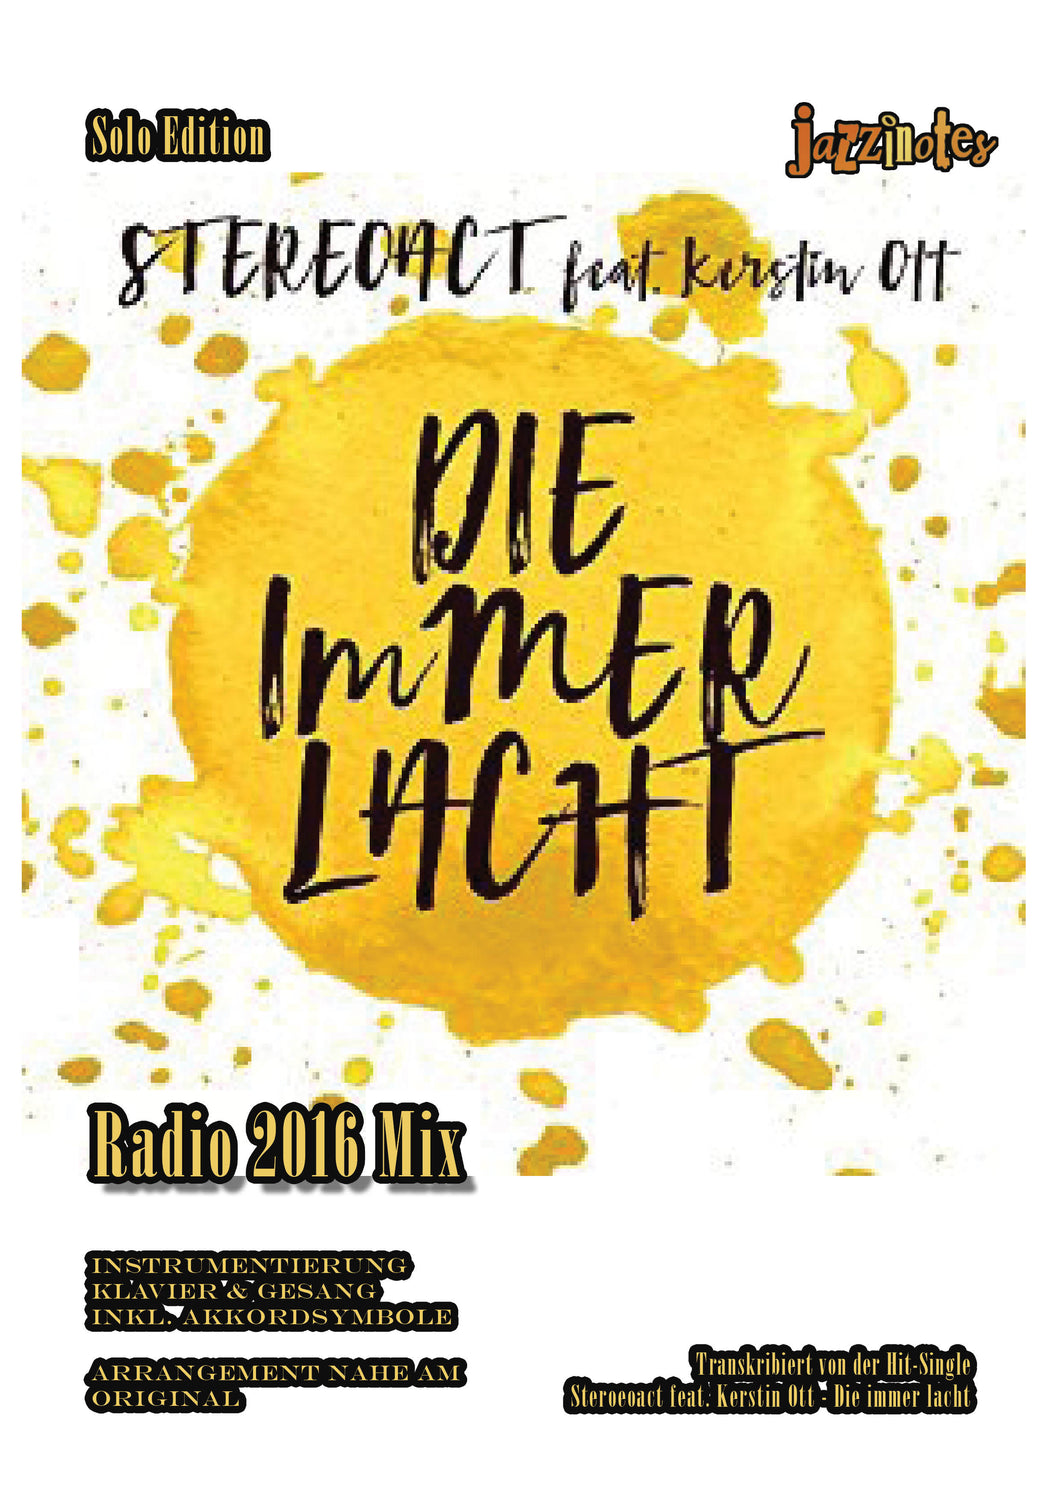 Stereoact feat. Kerstin Ott: Die immer lacht (Radio Edit) - Sheet Music Download